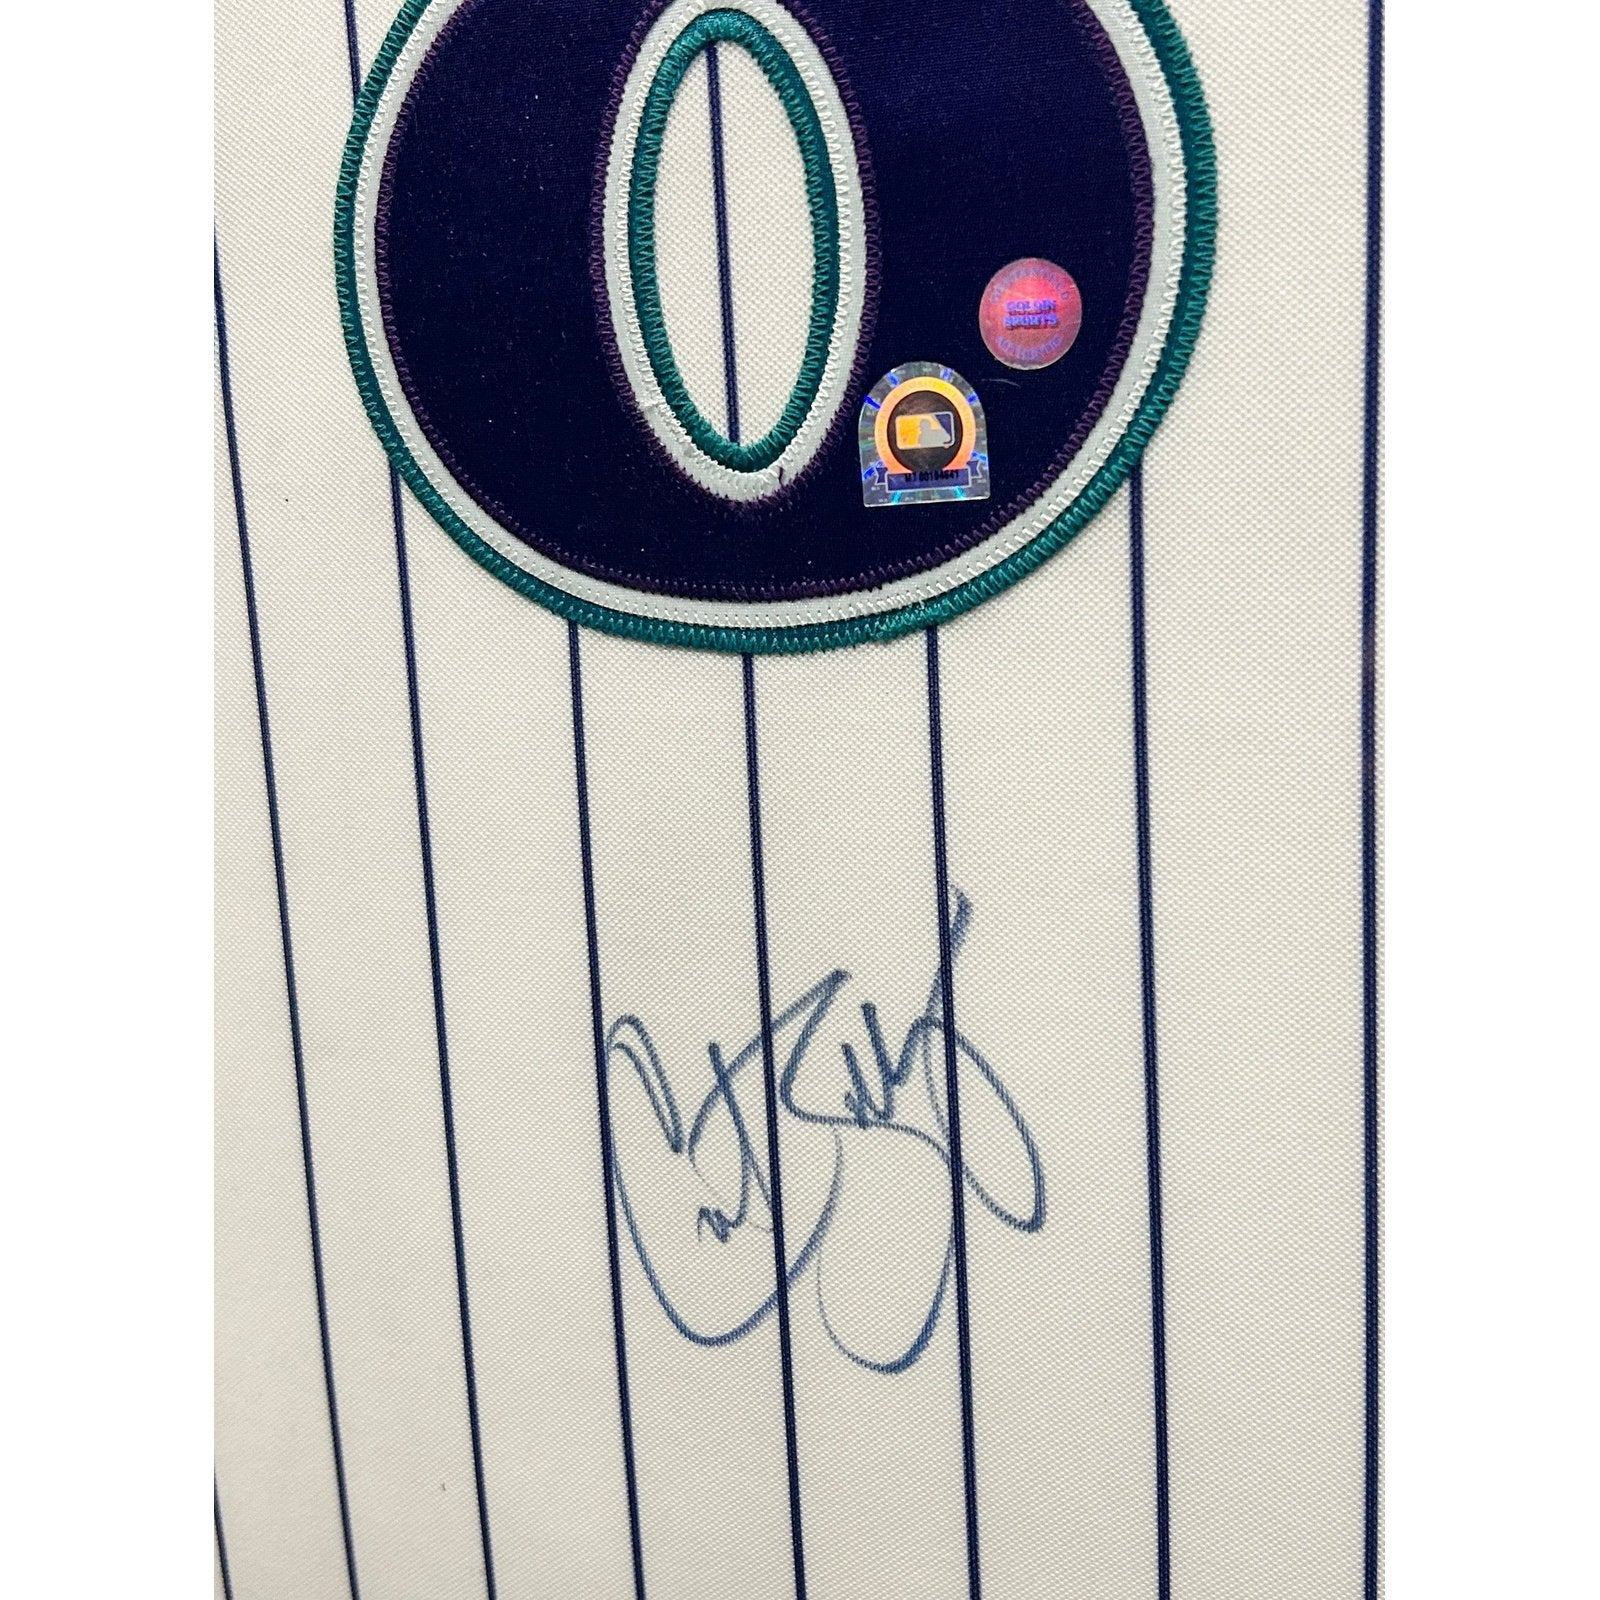 Autographed MLB Jerseys, Autographed Jerseys, MLB Autographed